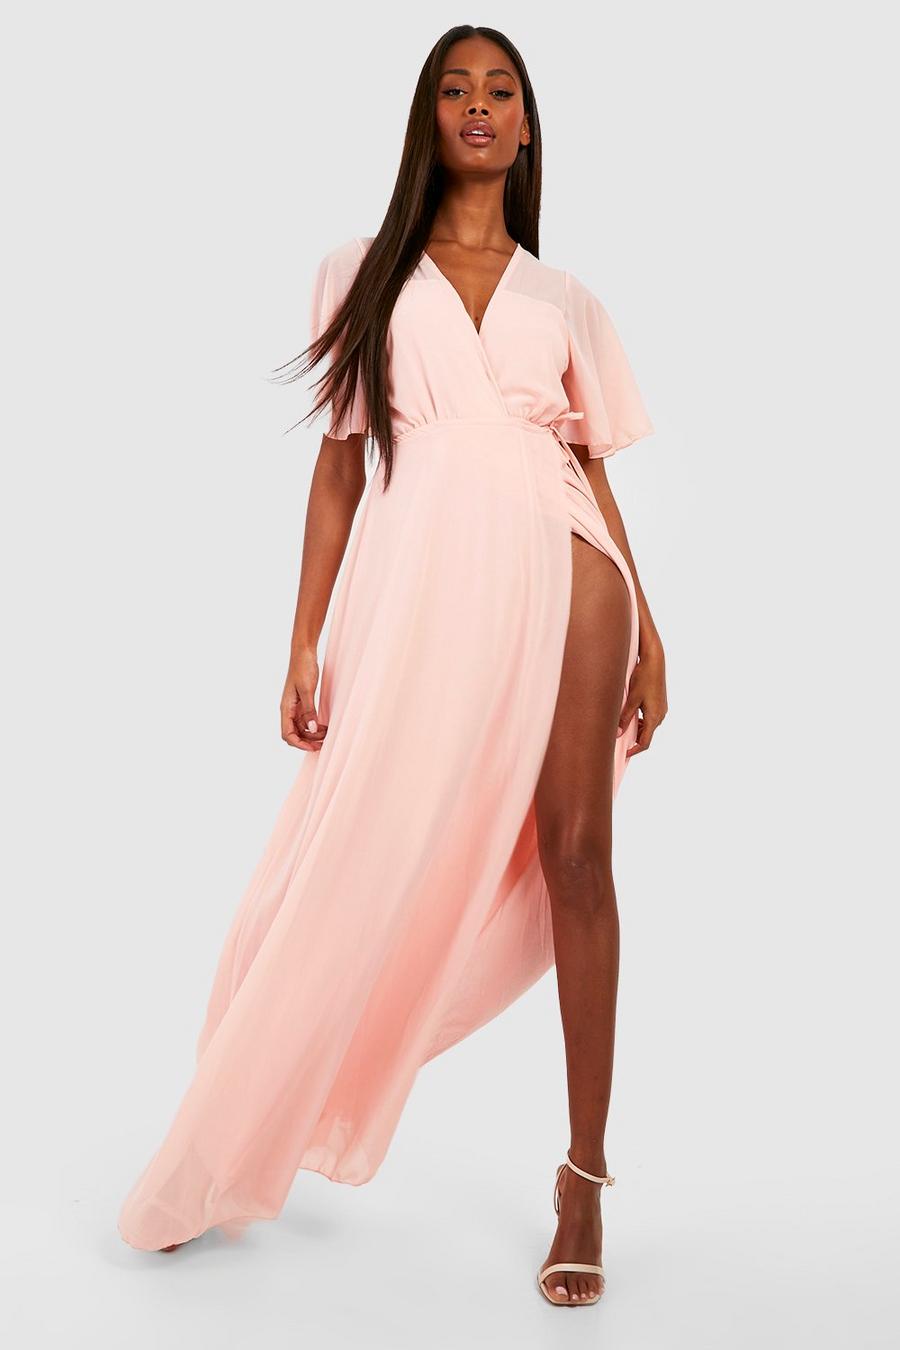 Blush rose Chiffon Angel Sleeve Wrap Maxi Bridesmaid Dress